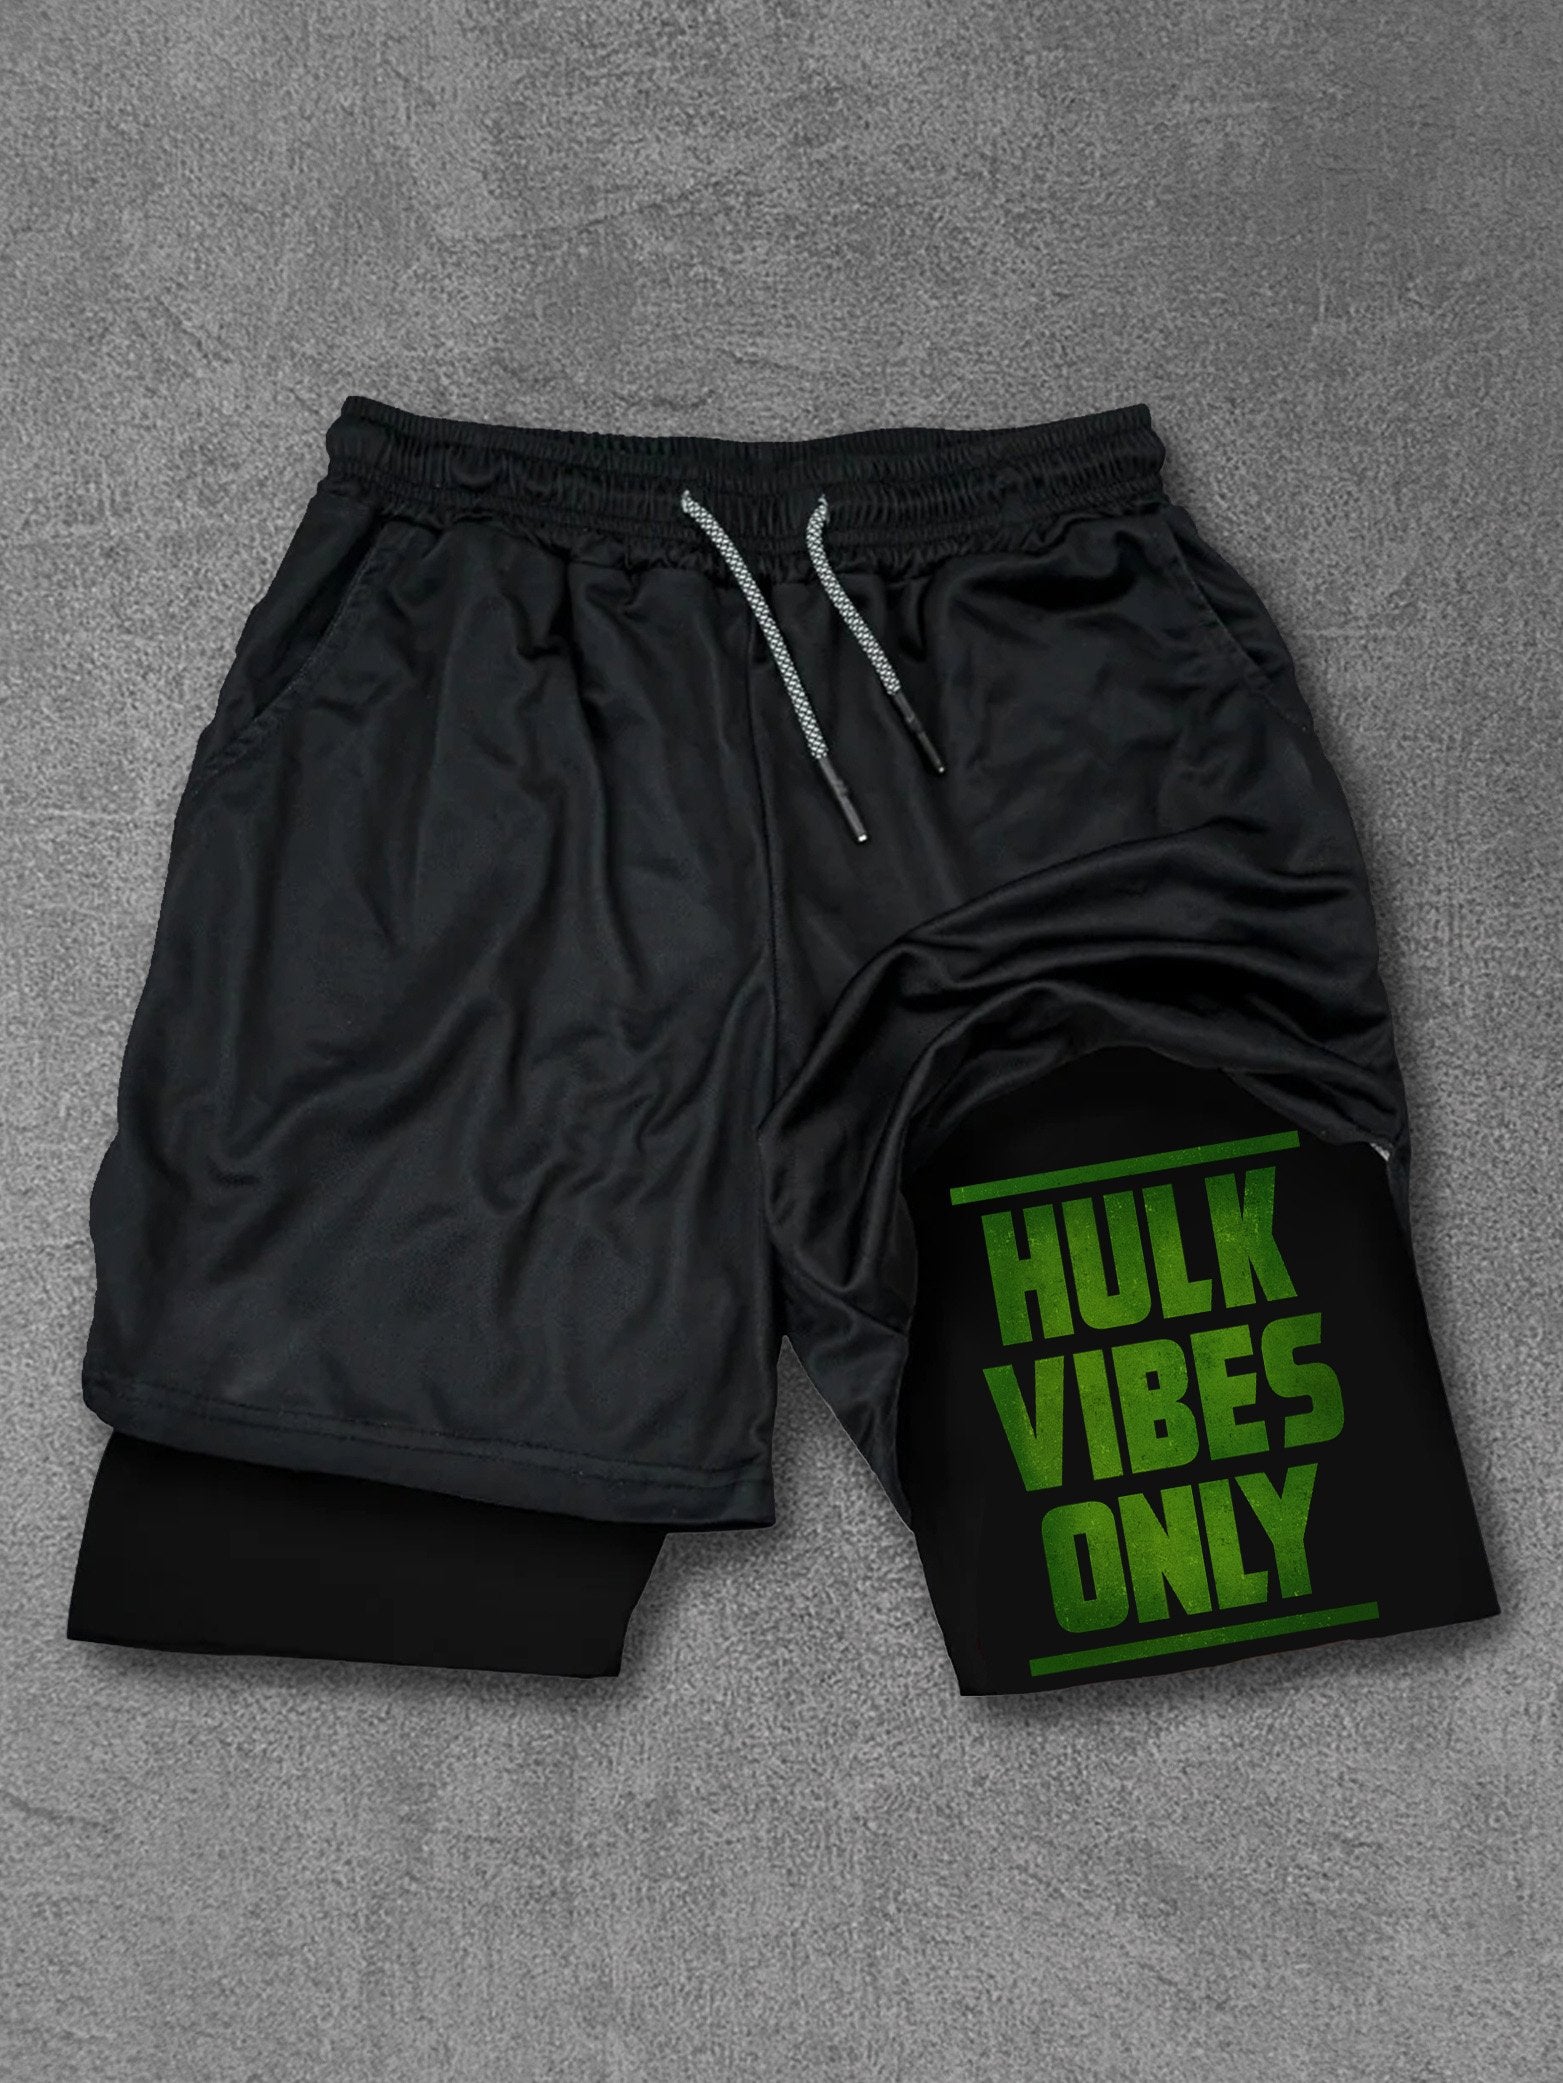 hulk vibes only Performance Training Shorts